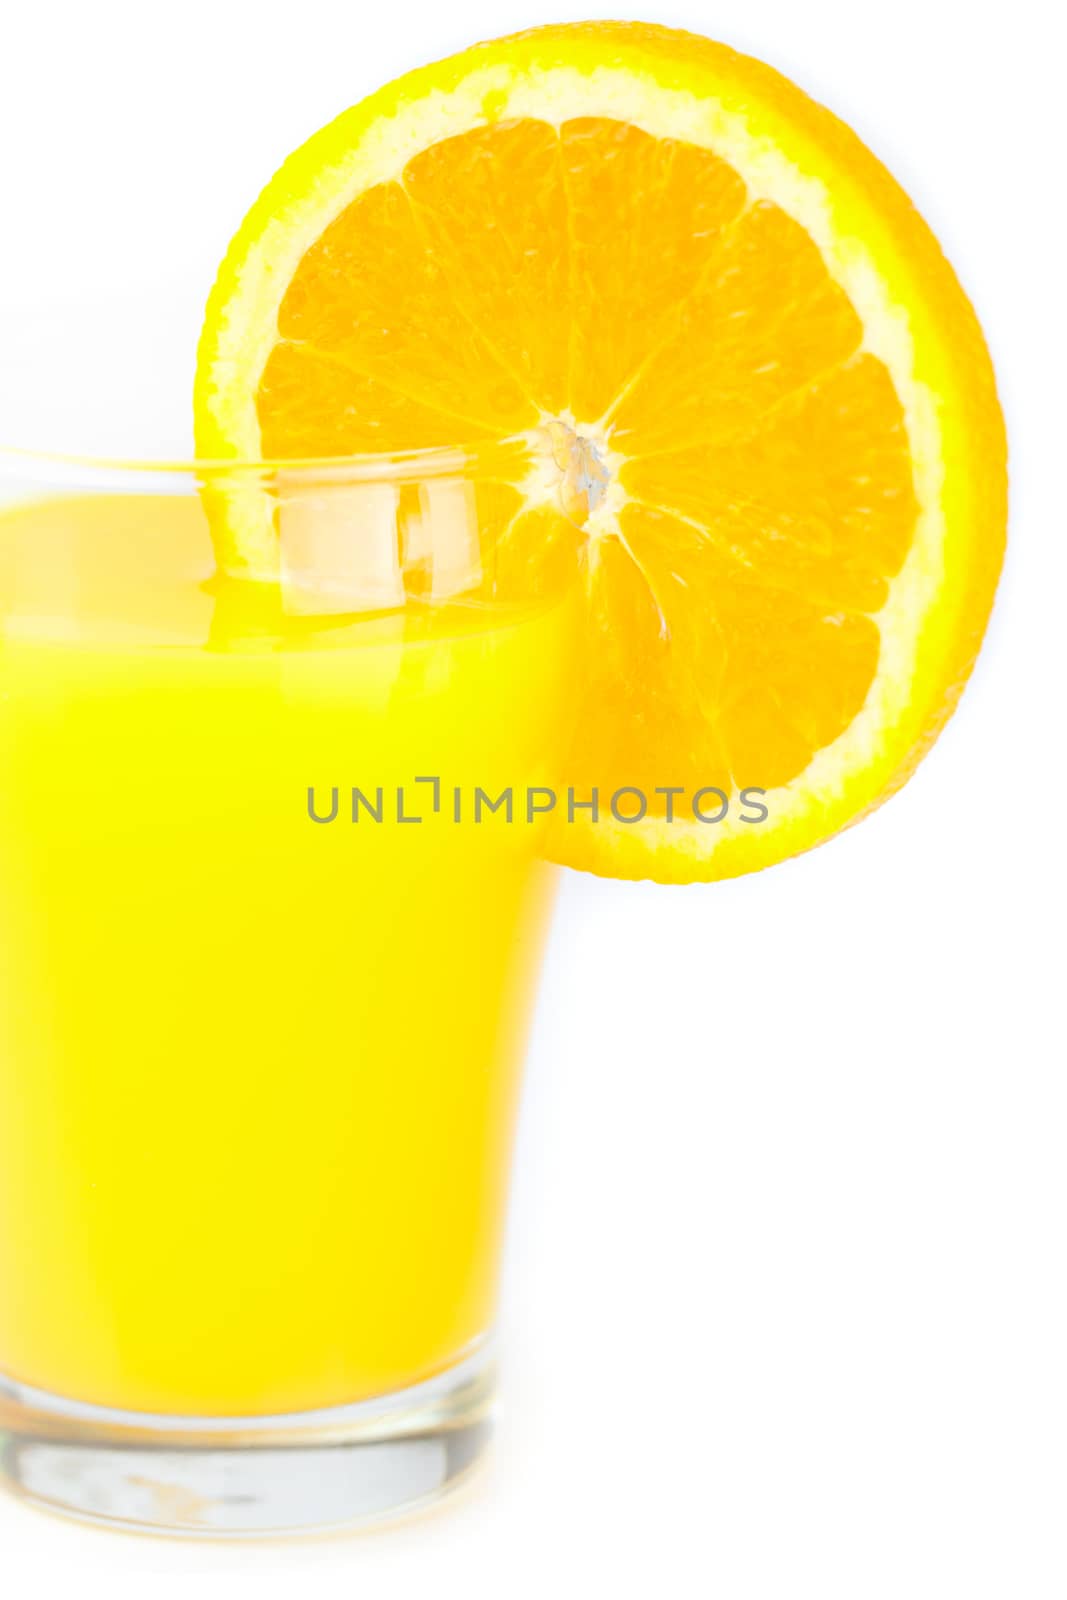 orange and a glass of orange juice isolated on white